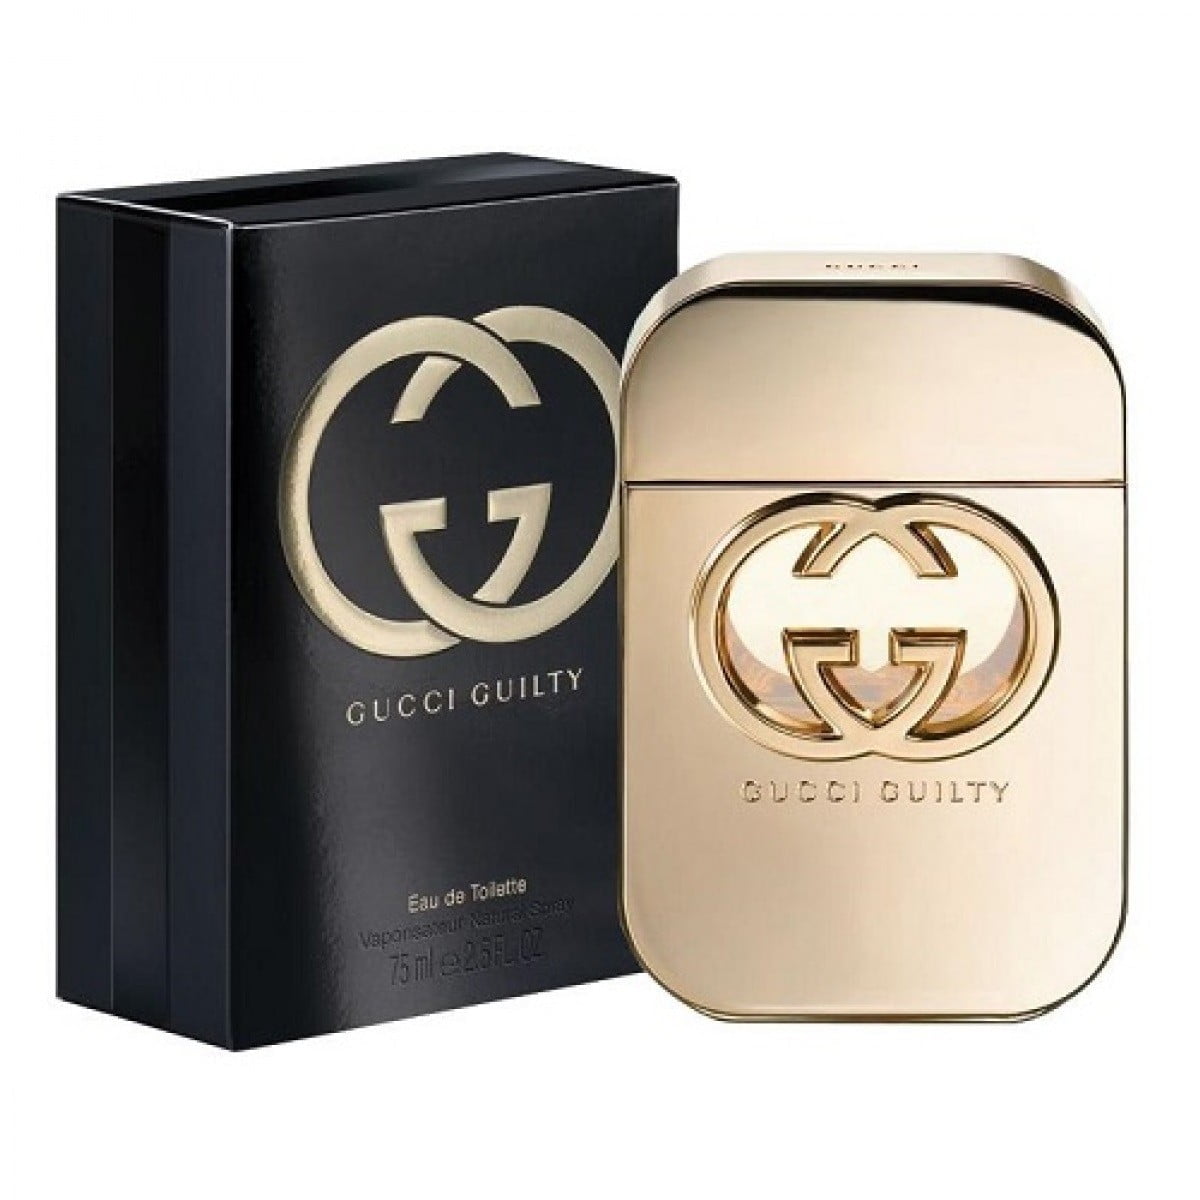 Gucci Guilty EDT (75mL) » FragranceBD